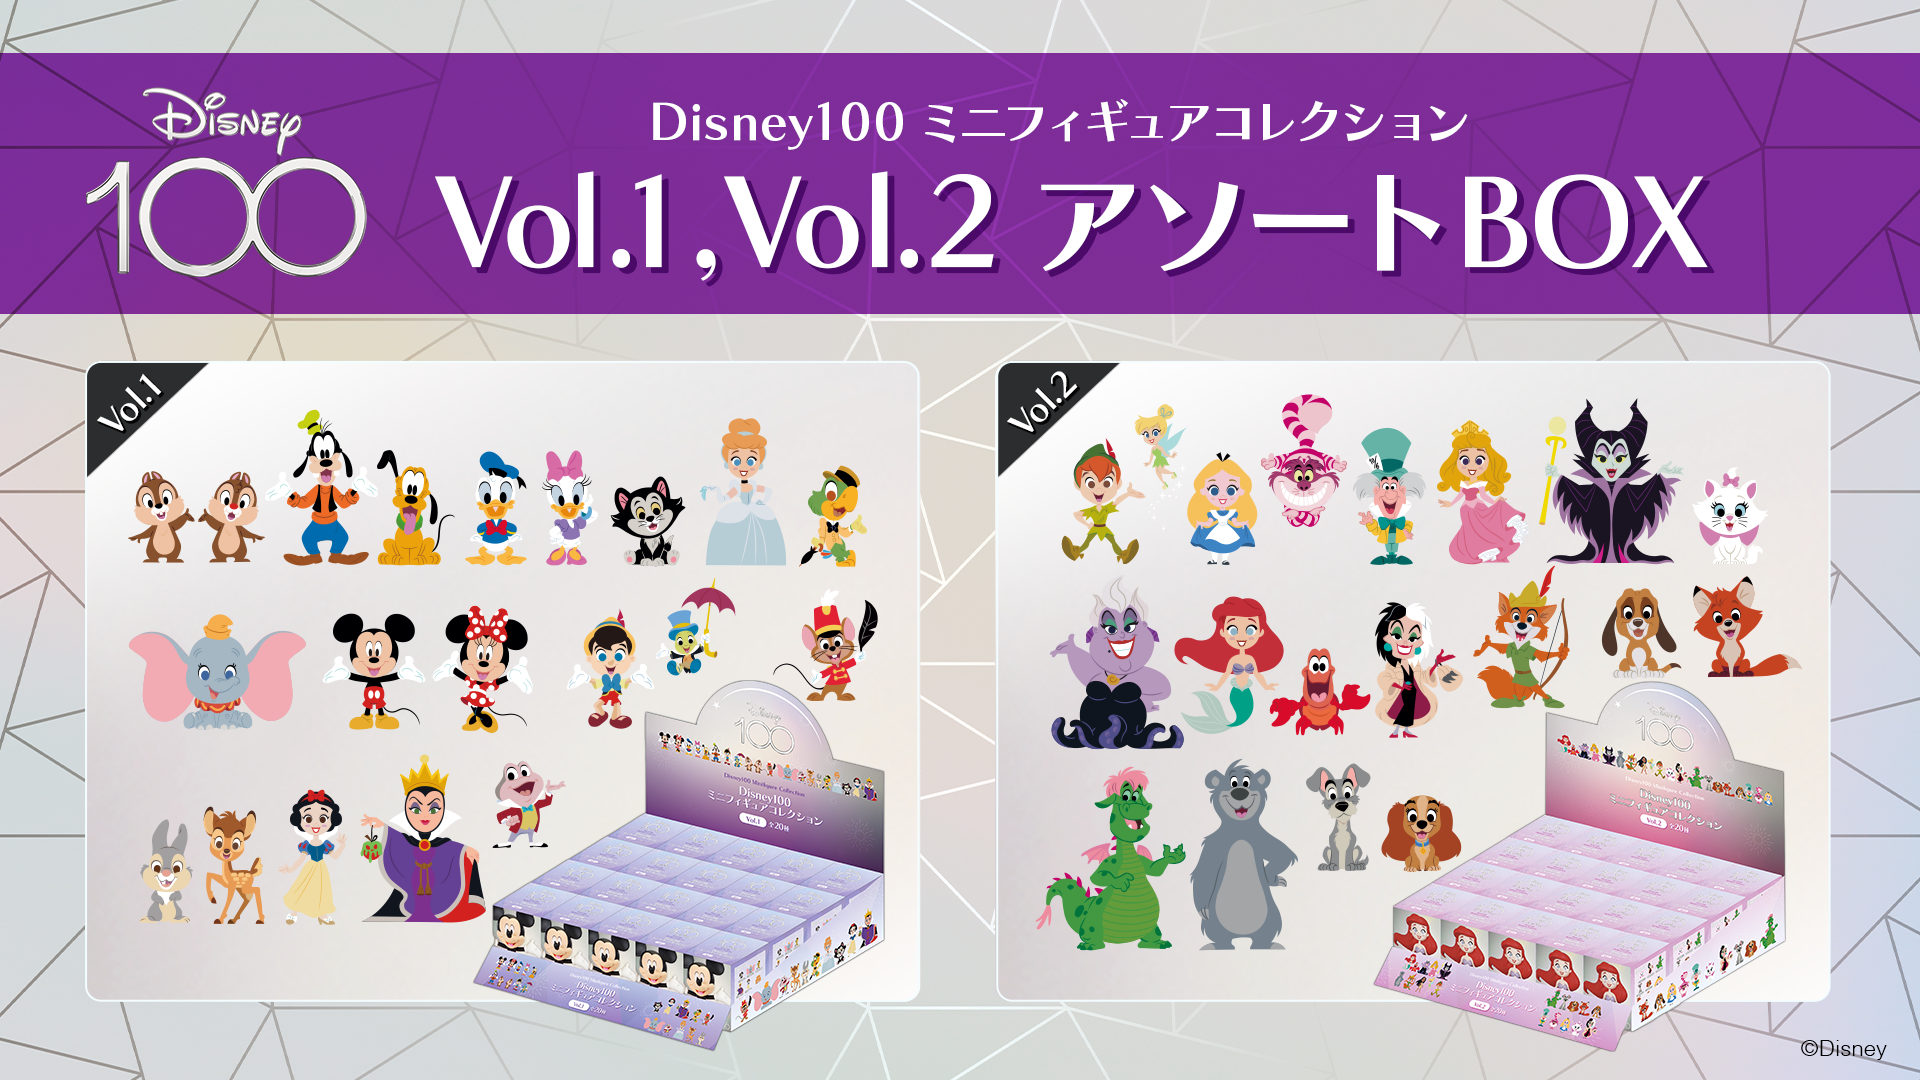 ★ Disney100 ミニフィギュアコレクション Vol.1 アソートBOX